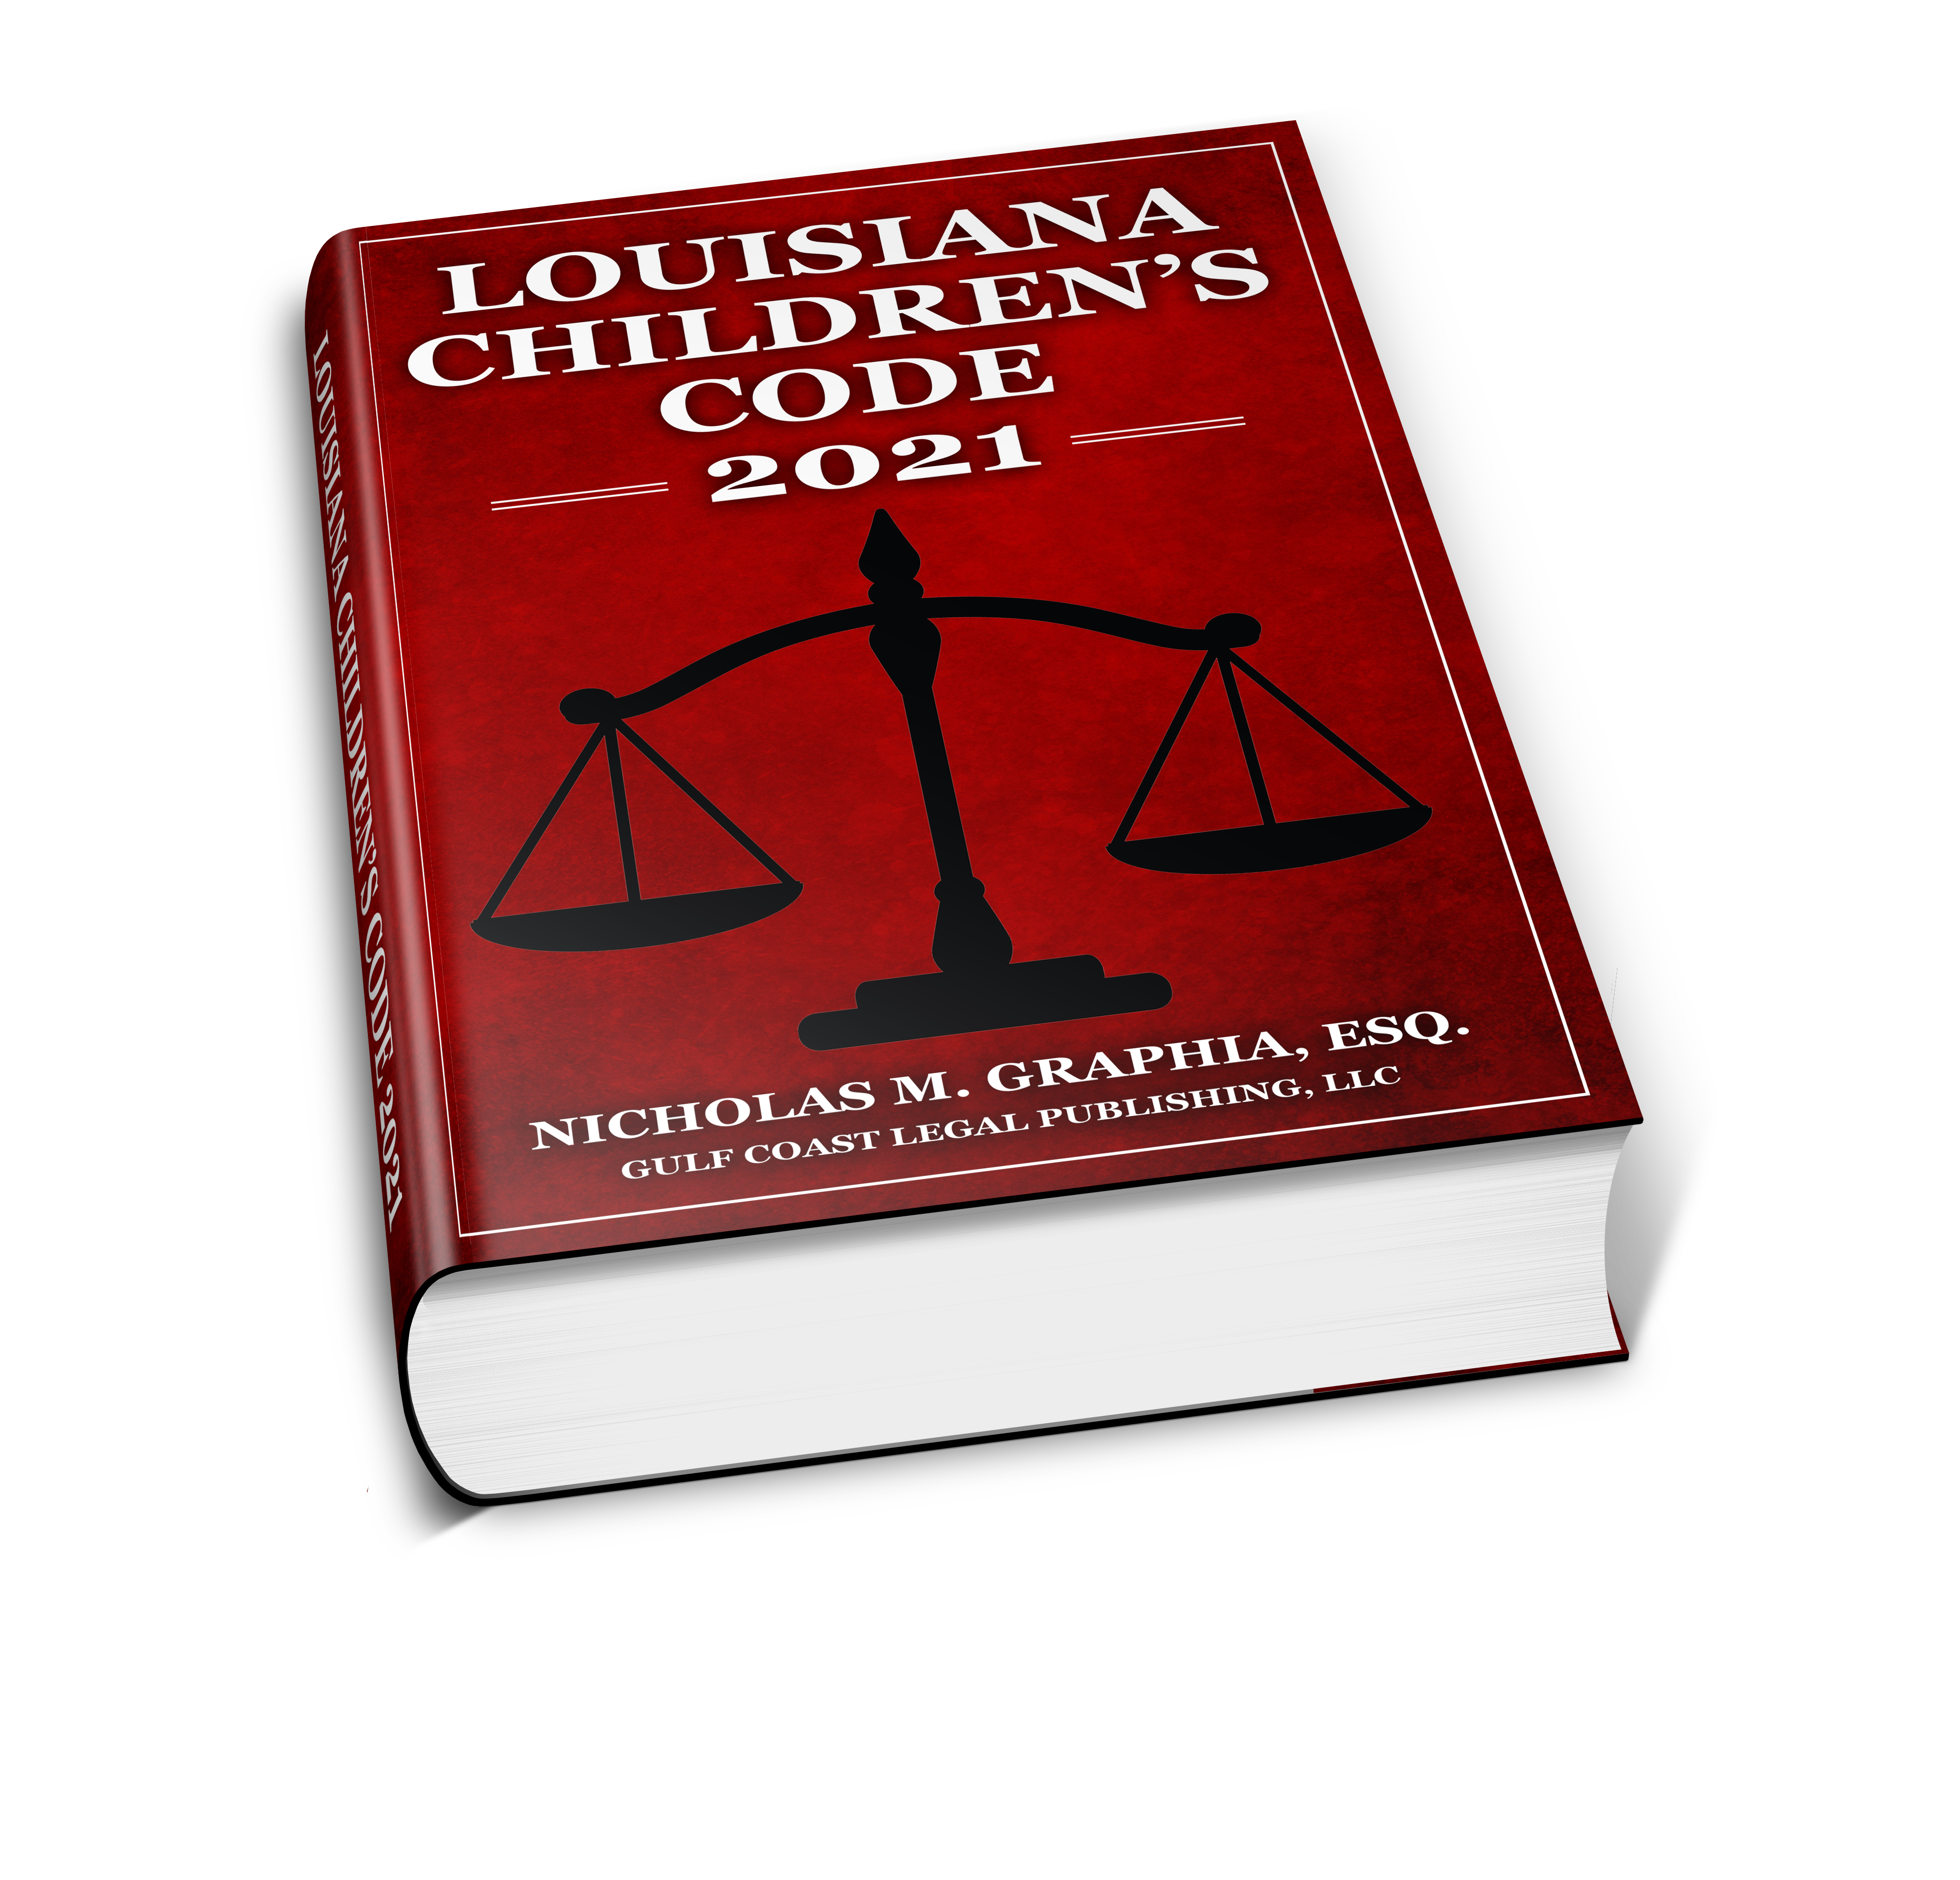 Louisiana Children’s Code 2021 – Gulf Coast Legal Publishing